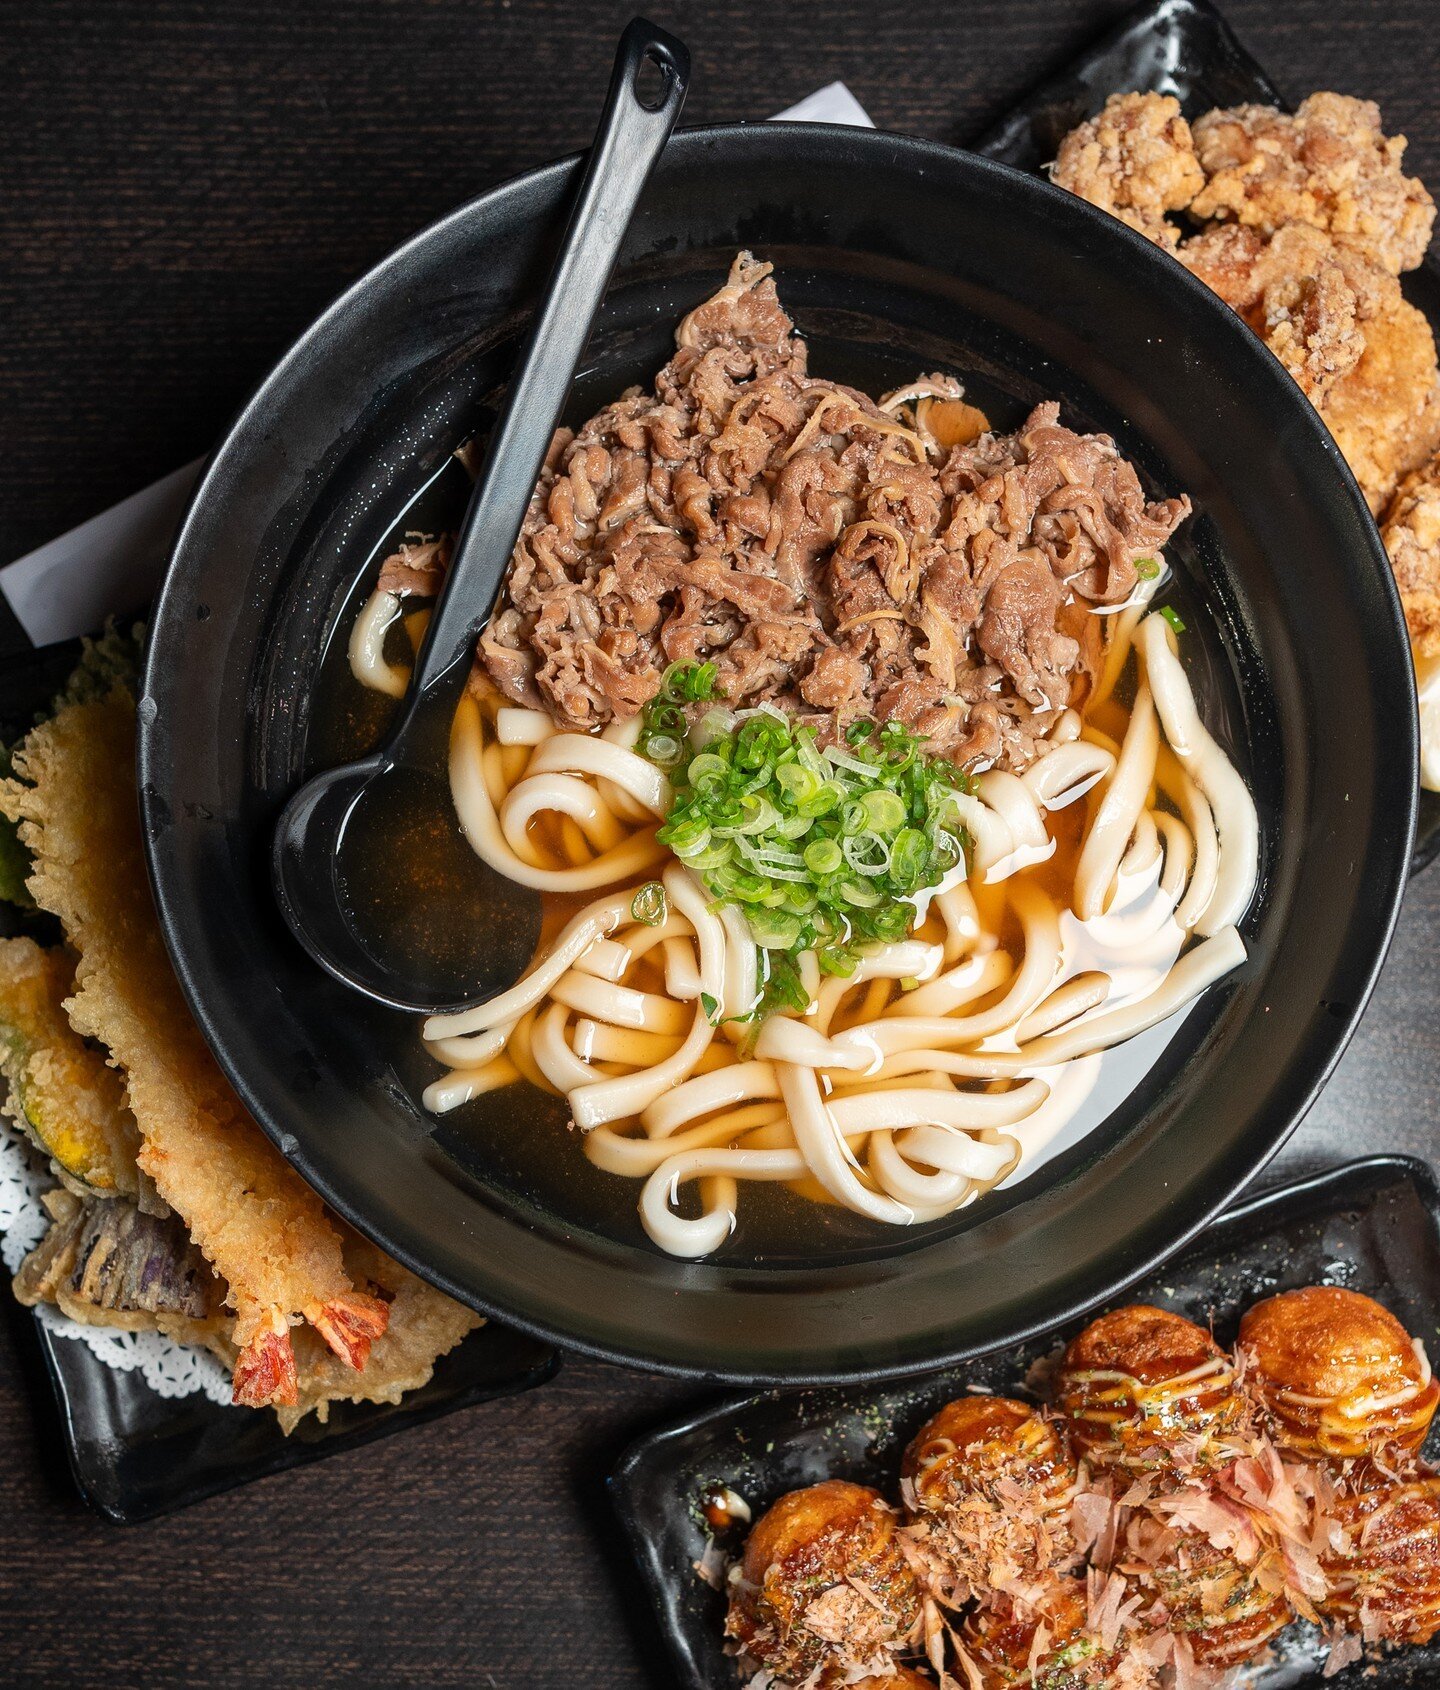 Satisfy your cravings with a steaming bowl of our hearty udon! ITADAKIMASU! #FoodieFindsLA 🍜🙌🏻 

👇 Freshly homemade noodles 
◾️◽️◾️◽️◾️◽️◾️◽️◾️◽️
🍜 ᴍᴀʀᴜɢᴀᴍᴇ ᴍᴏɴᴢᴏ ʟᴀ
⏰ ᴍᴏɴ - ᴛʜᴜʀꜱ : 11:30 ᴀᴍ - 9:00 ᴘᴍ 
⏰ ꜰʀɪ - ꜱᴜɴ: 11:30 ᴀᴍ - 10:00 ᴘᴍ
📍 9 ᴇᴀꜱᴛ 